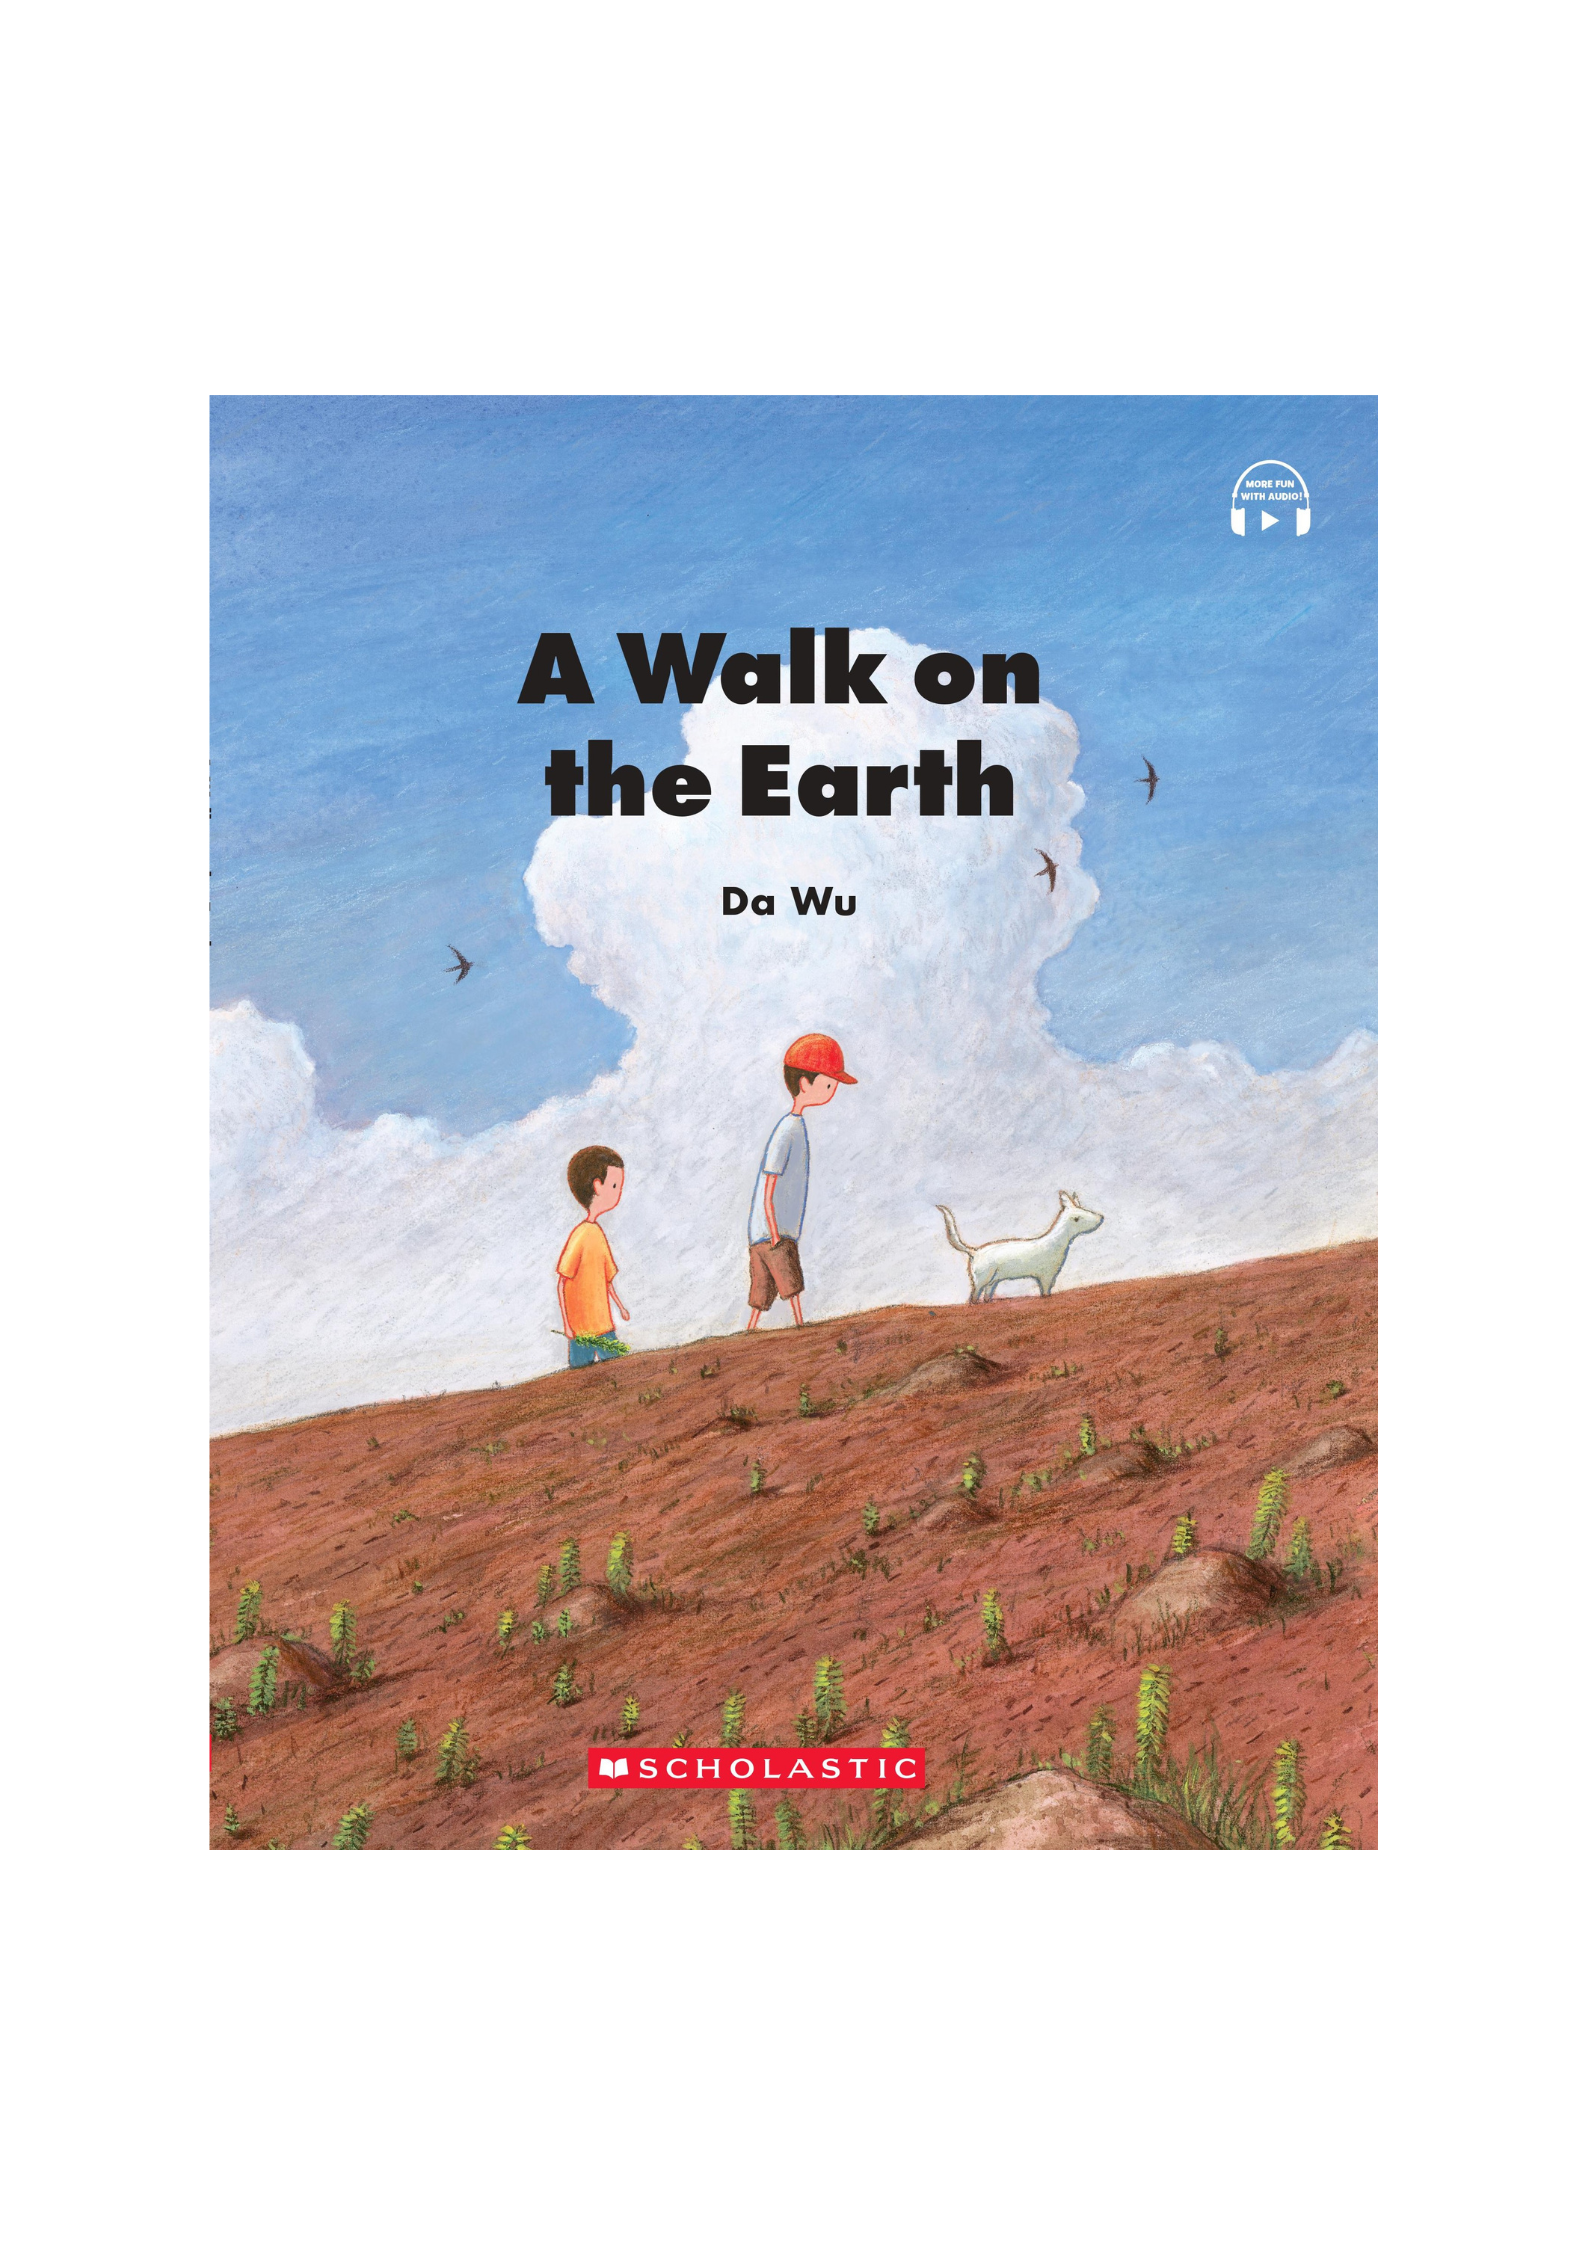 A Walk on the Earth